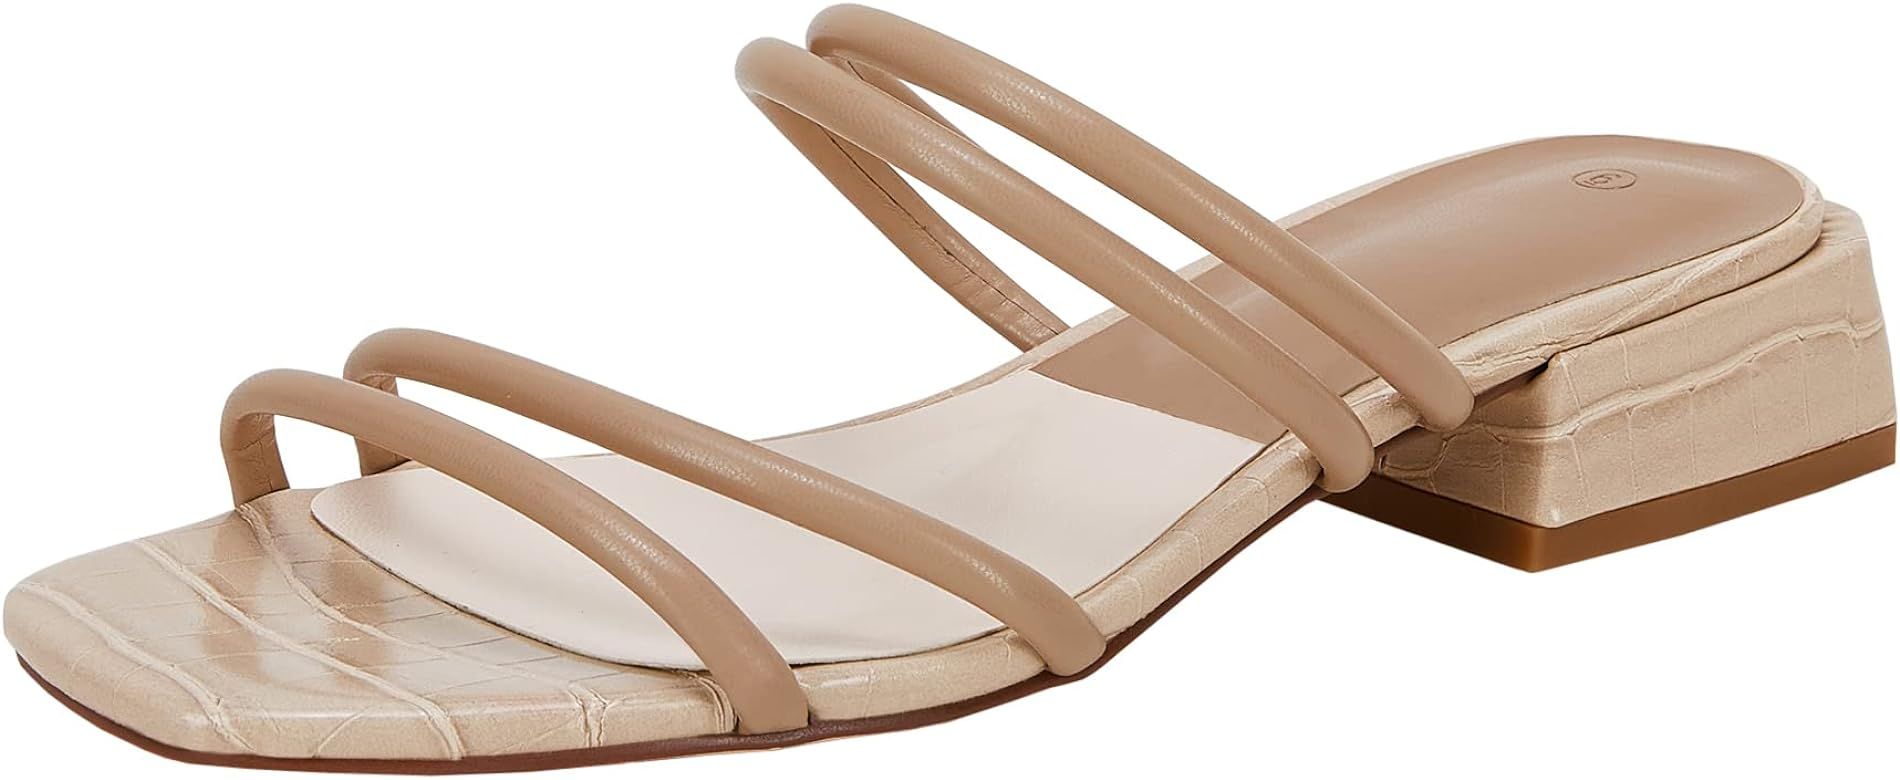 Women's Low Block Heeled Strap Sandals Summer Open Toe Slide Sandals | Amazon (US)